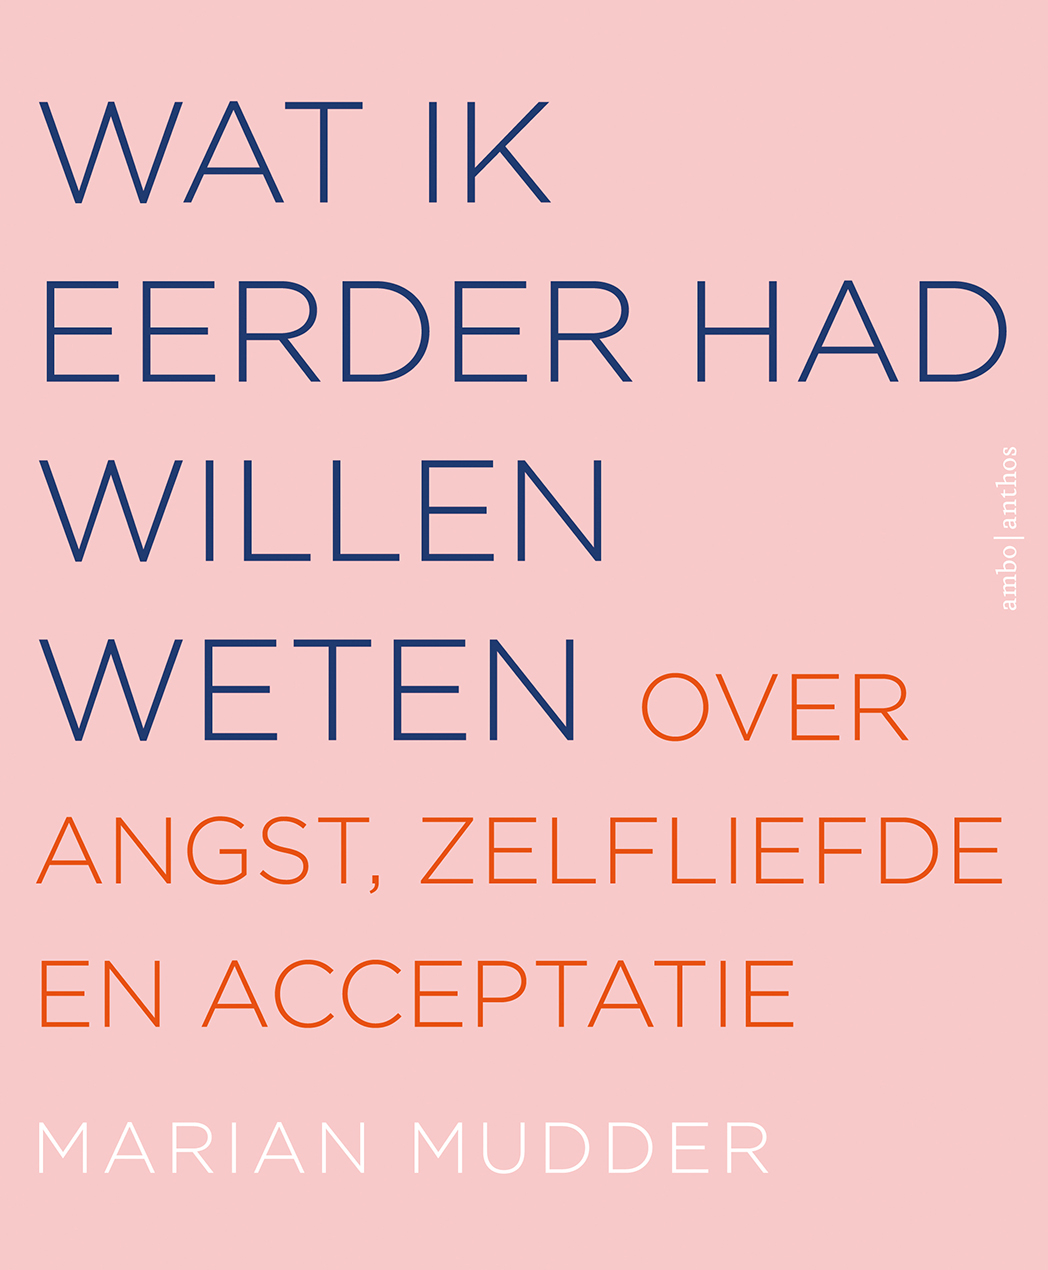 Marian Mudder - boeken